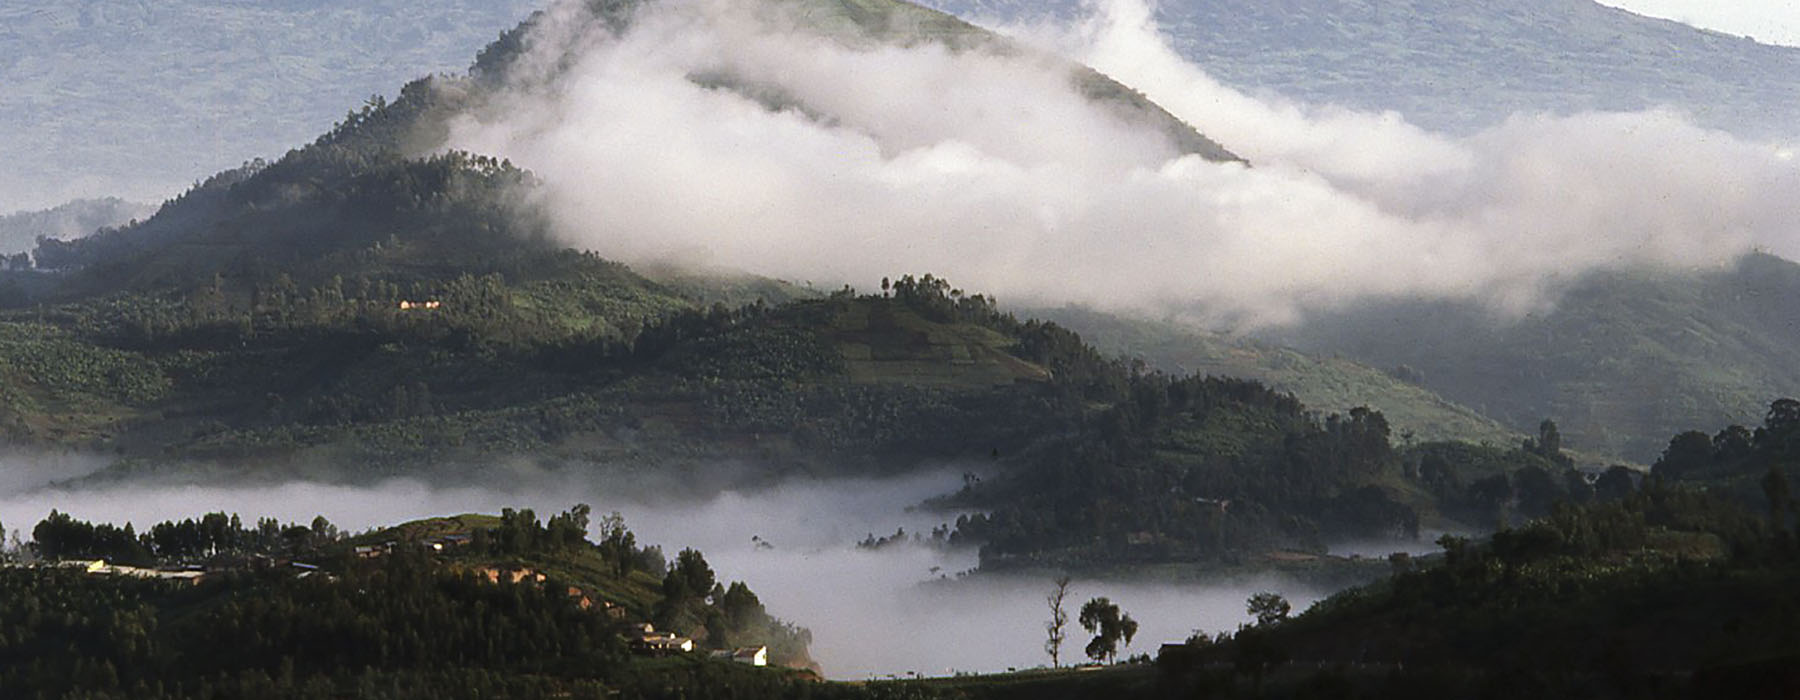 Rwanda<br class="hidden-md hidden-lg" /> Luxury Holidays